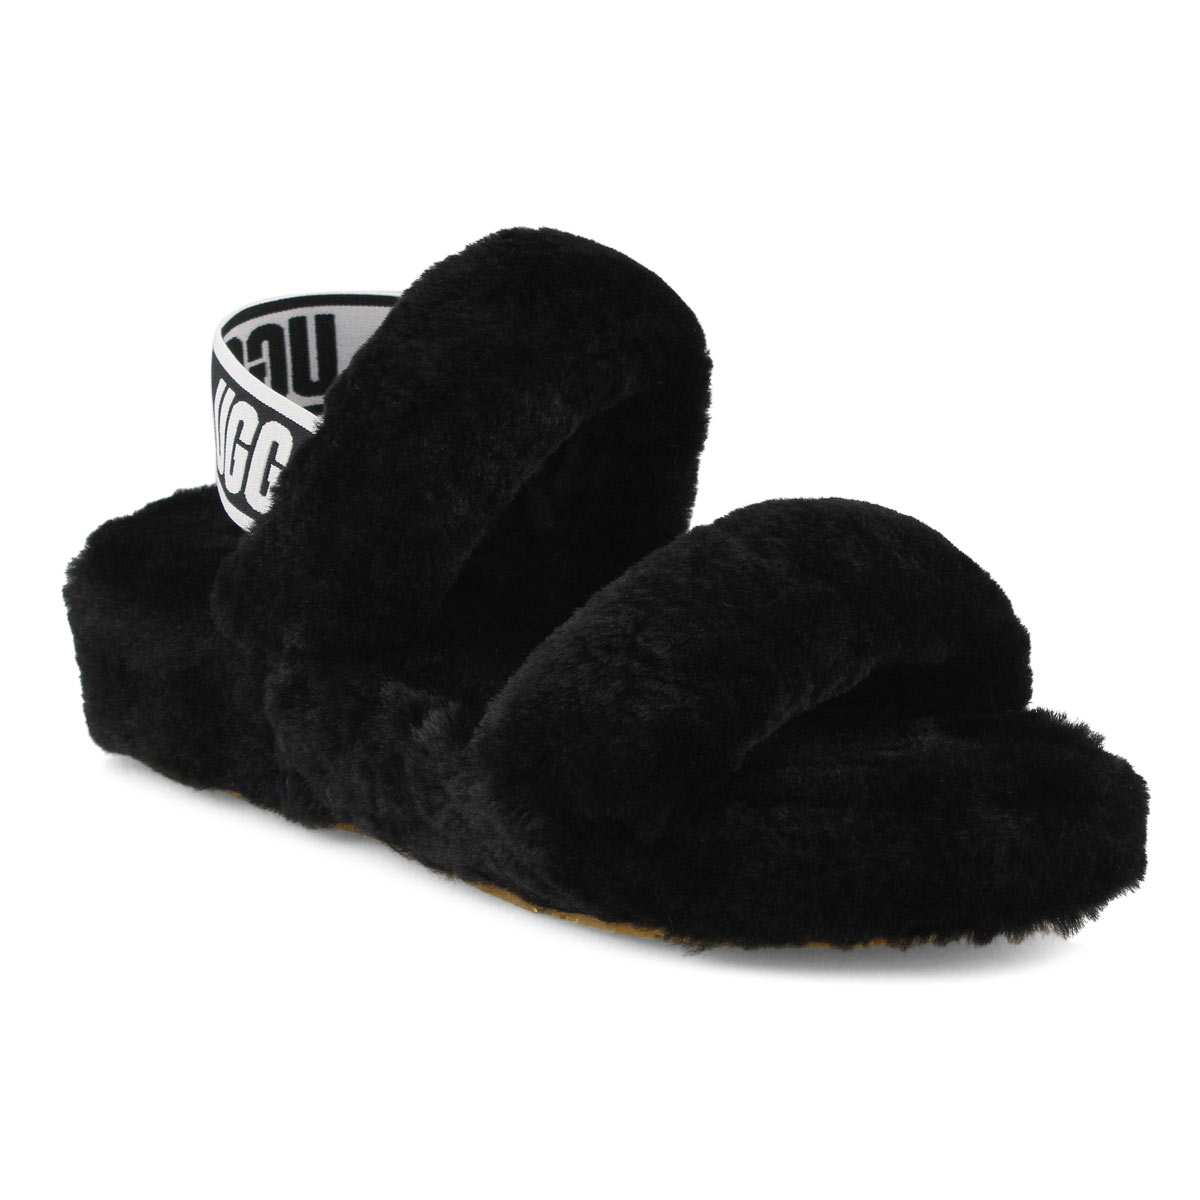 ugg slippers soft moc